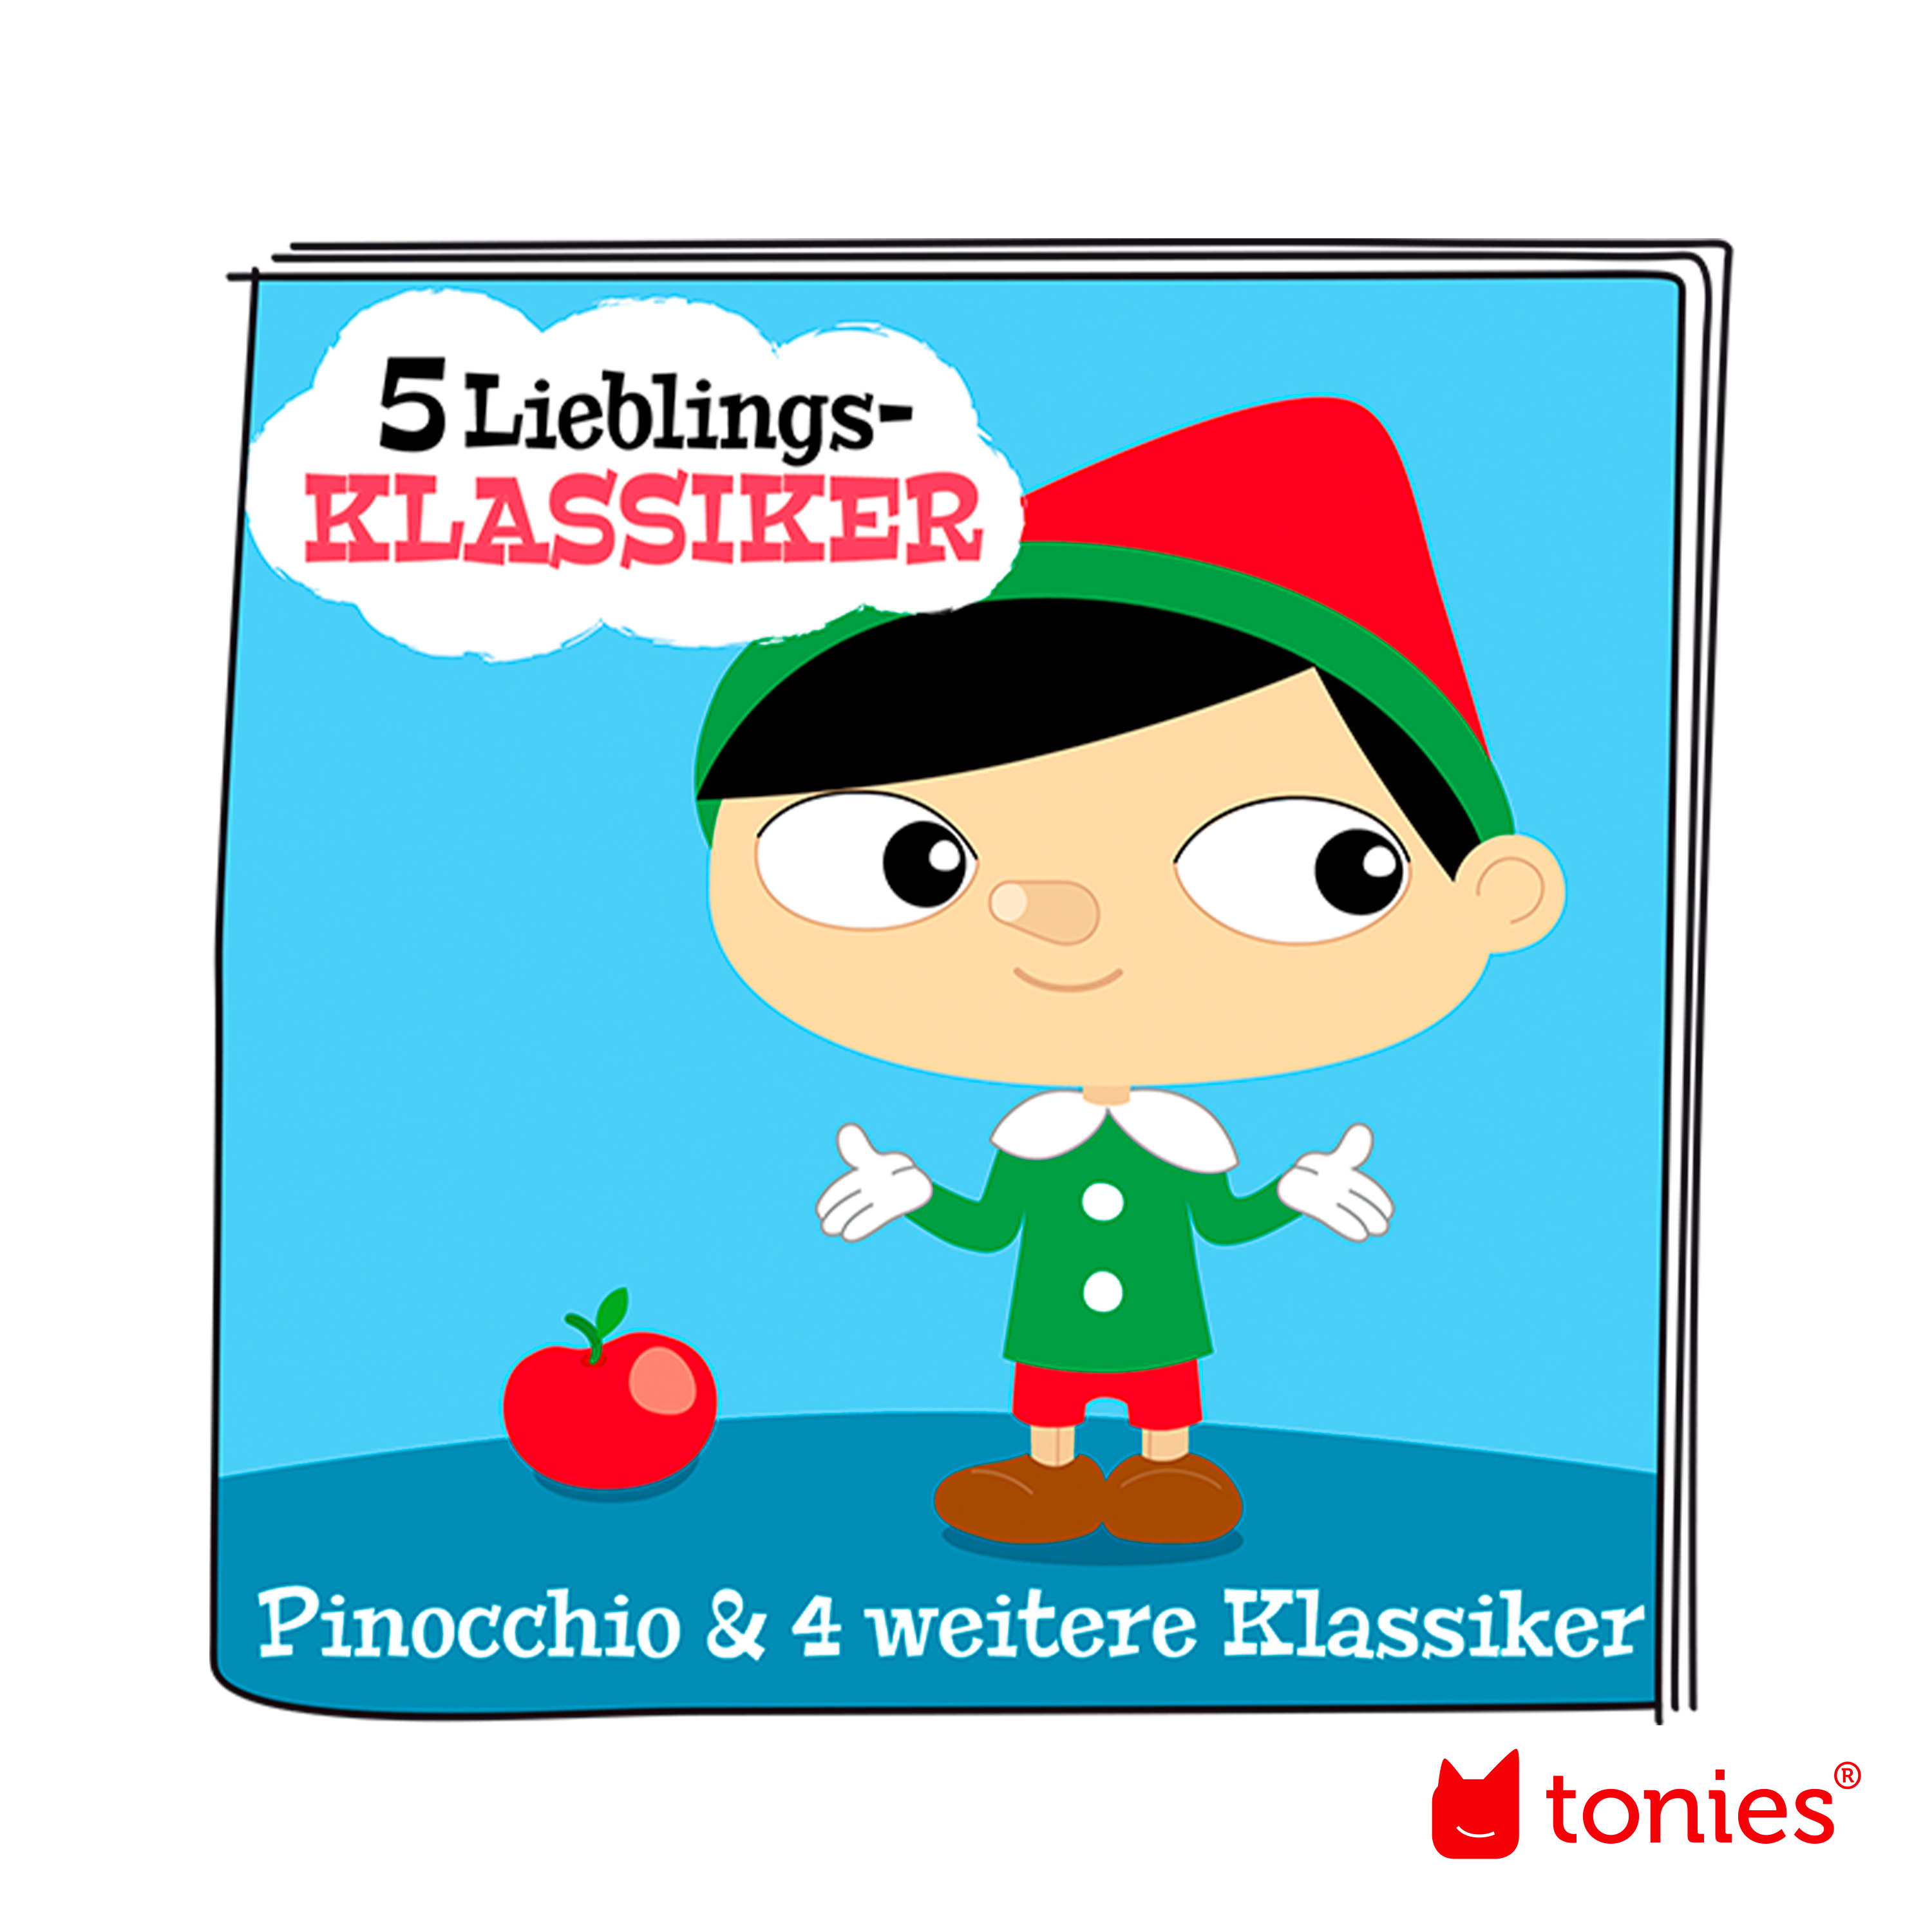 Tonie '5 Lieblings-Klassiker – Pinocchio & Co.'